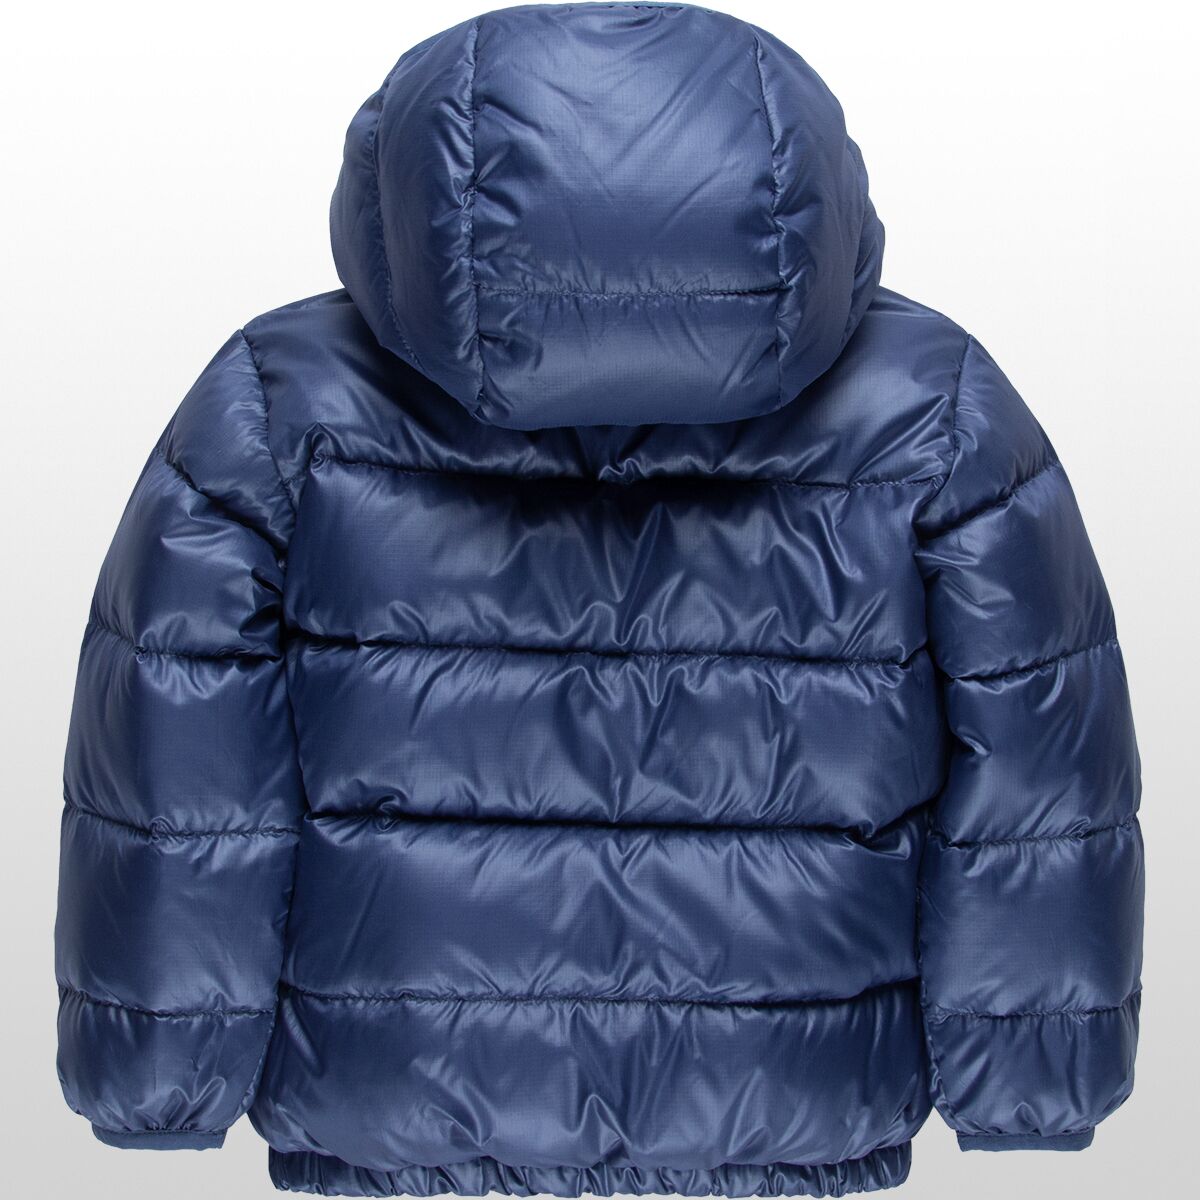 Patagonia Hi-Loft Down Sweater Hooded Jacket - Infant Girls' - Kids